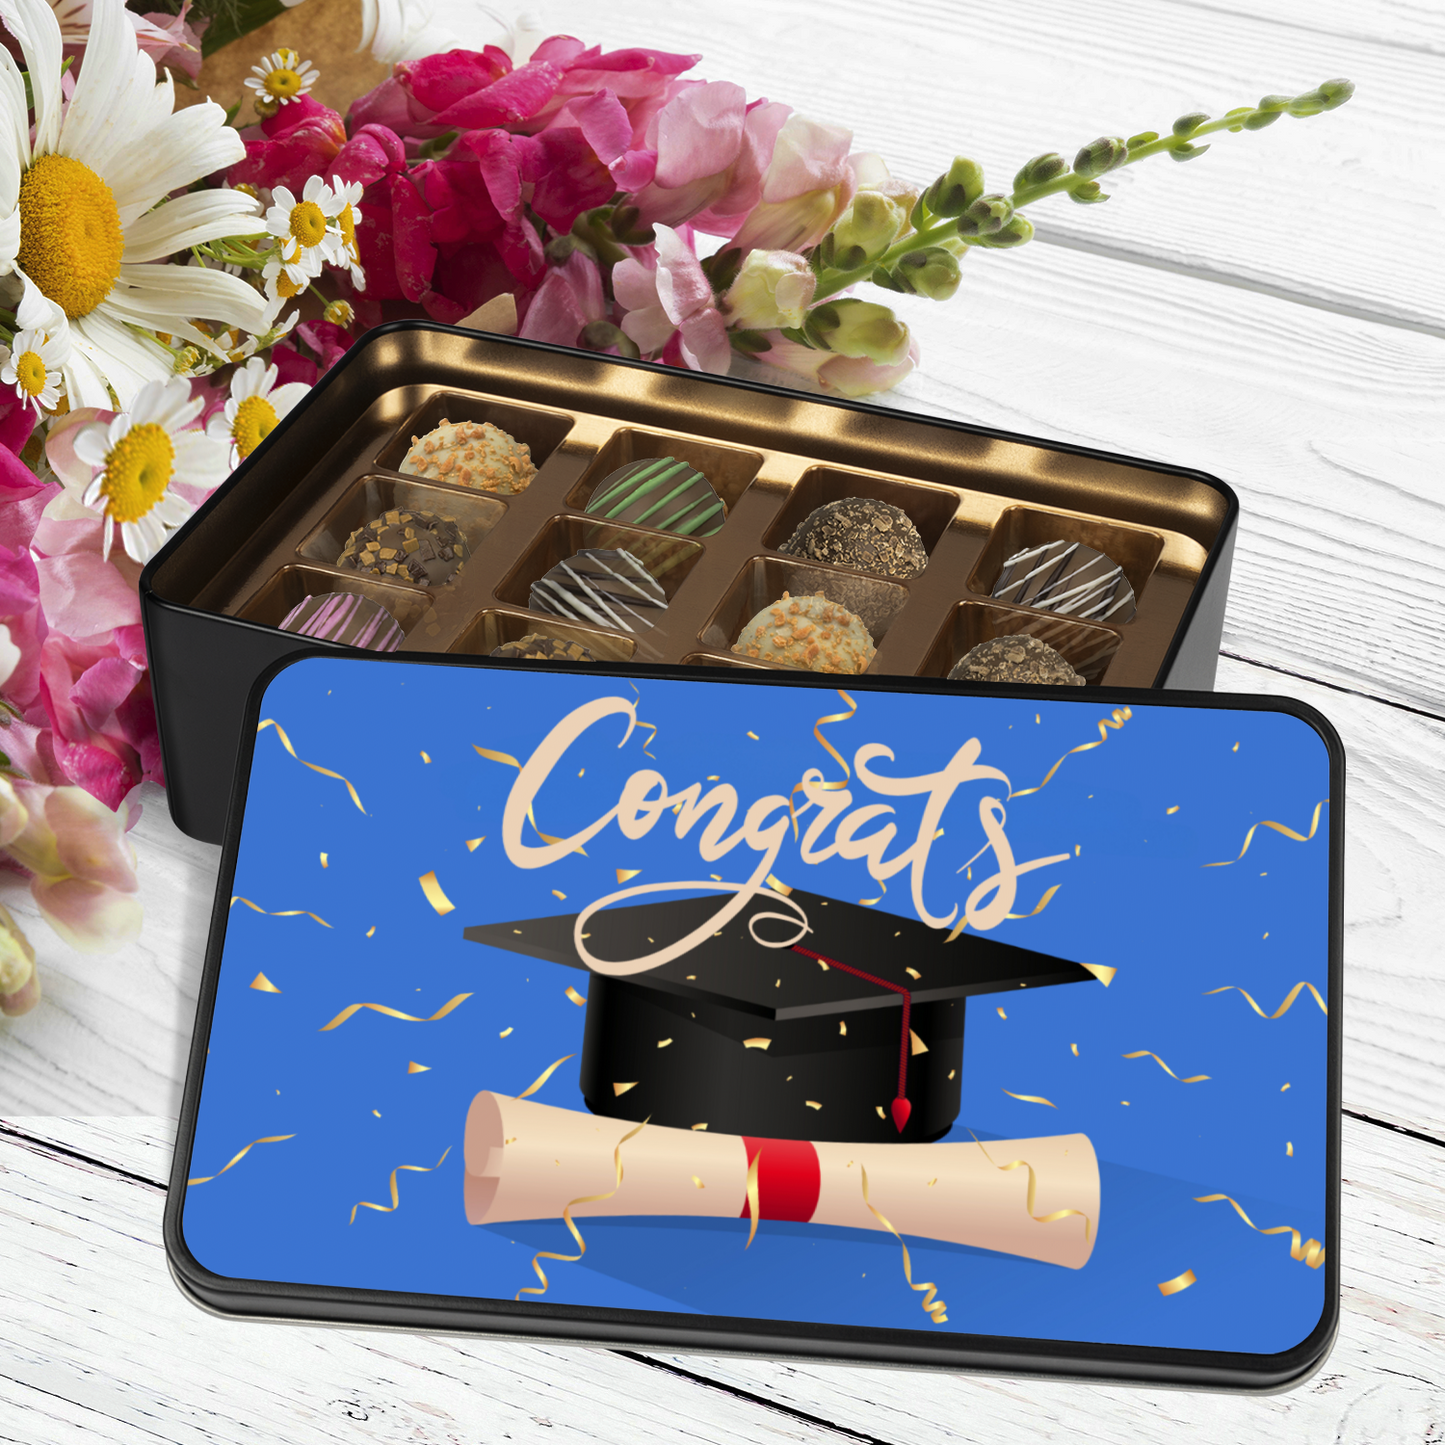 Congrats Graduation Truffle Box - Assorted Flavors in Blue-themed Keepsake Tin